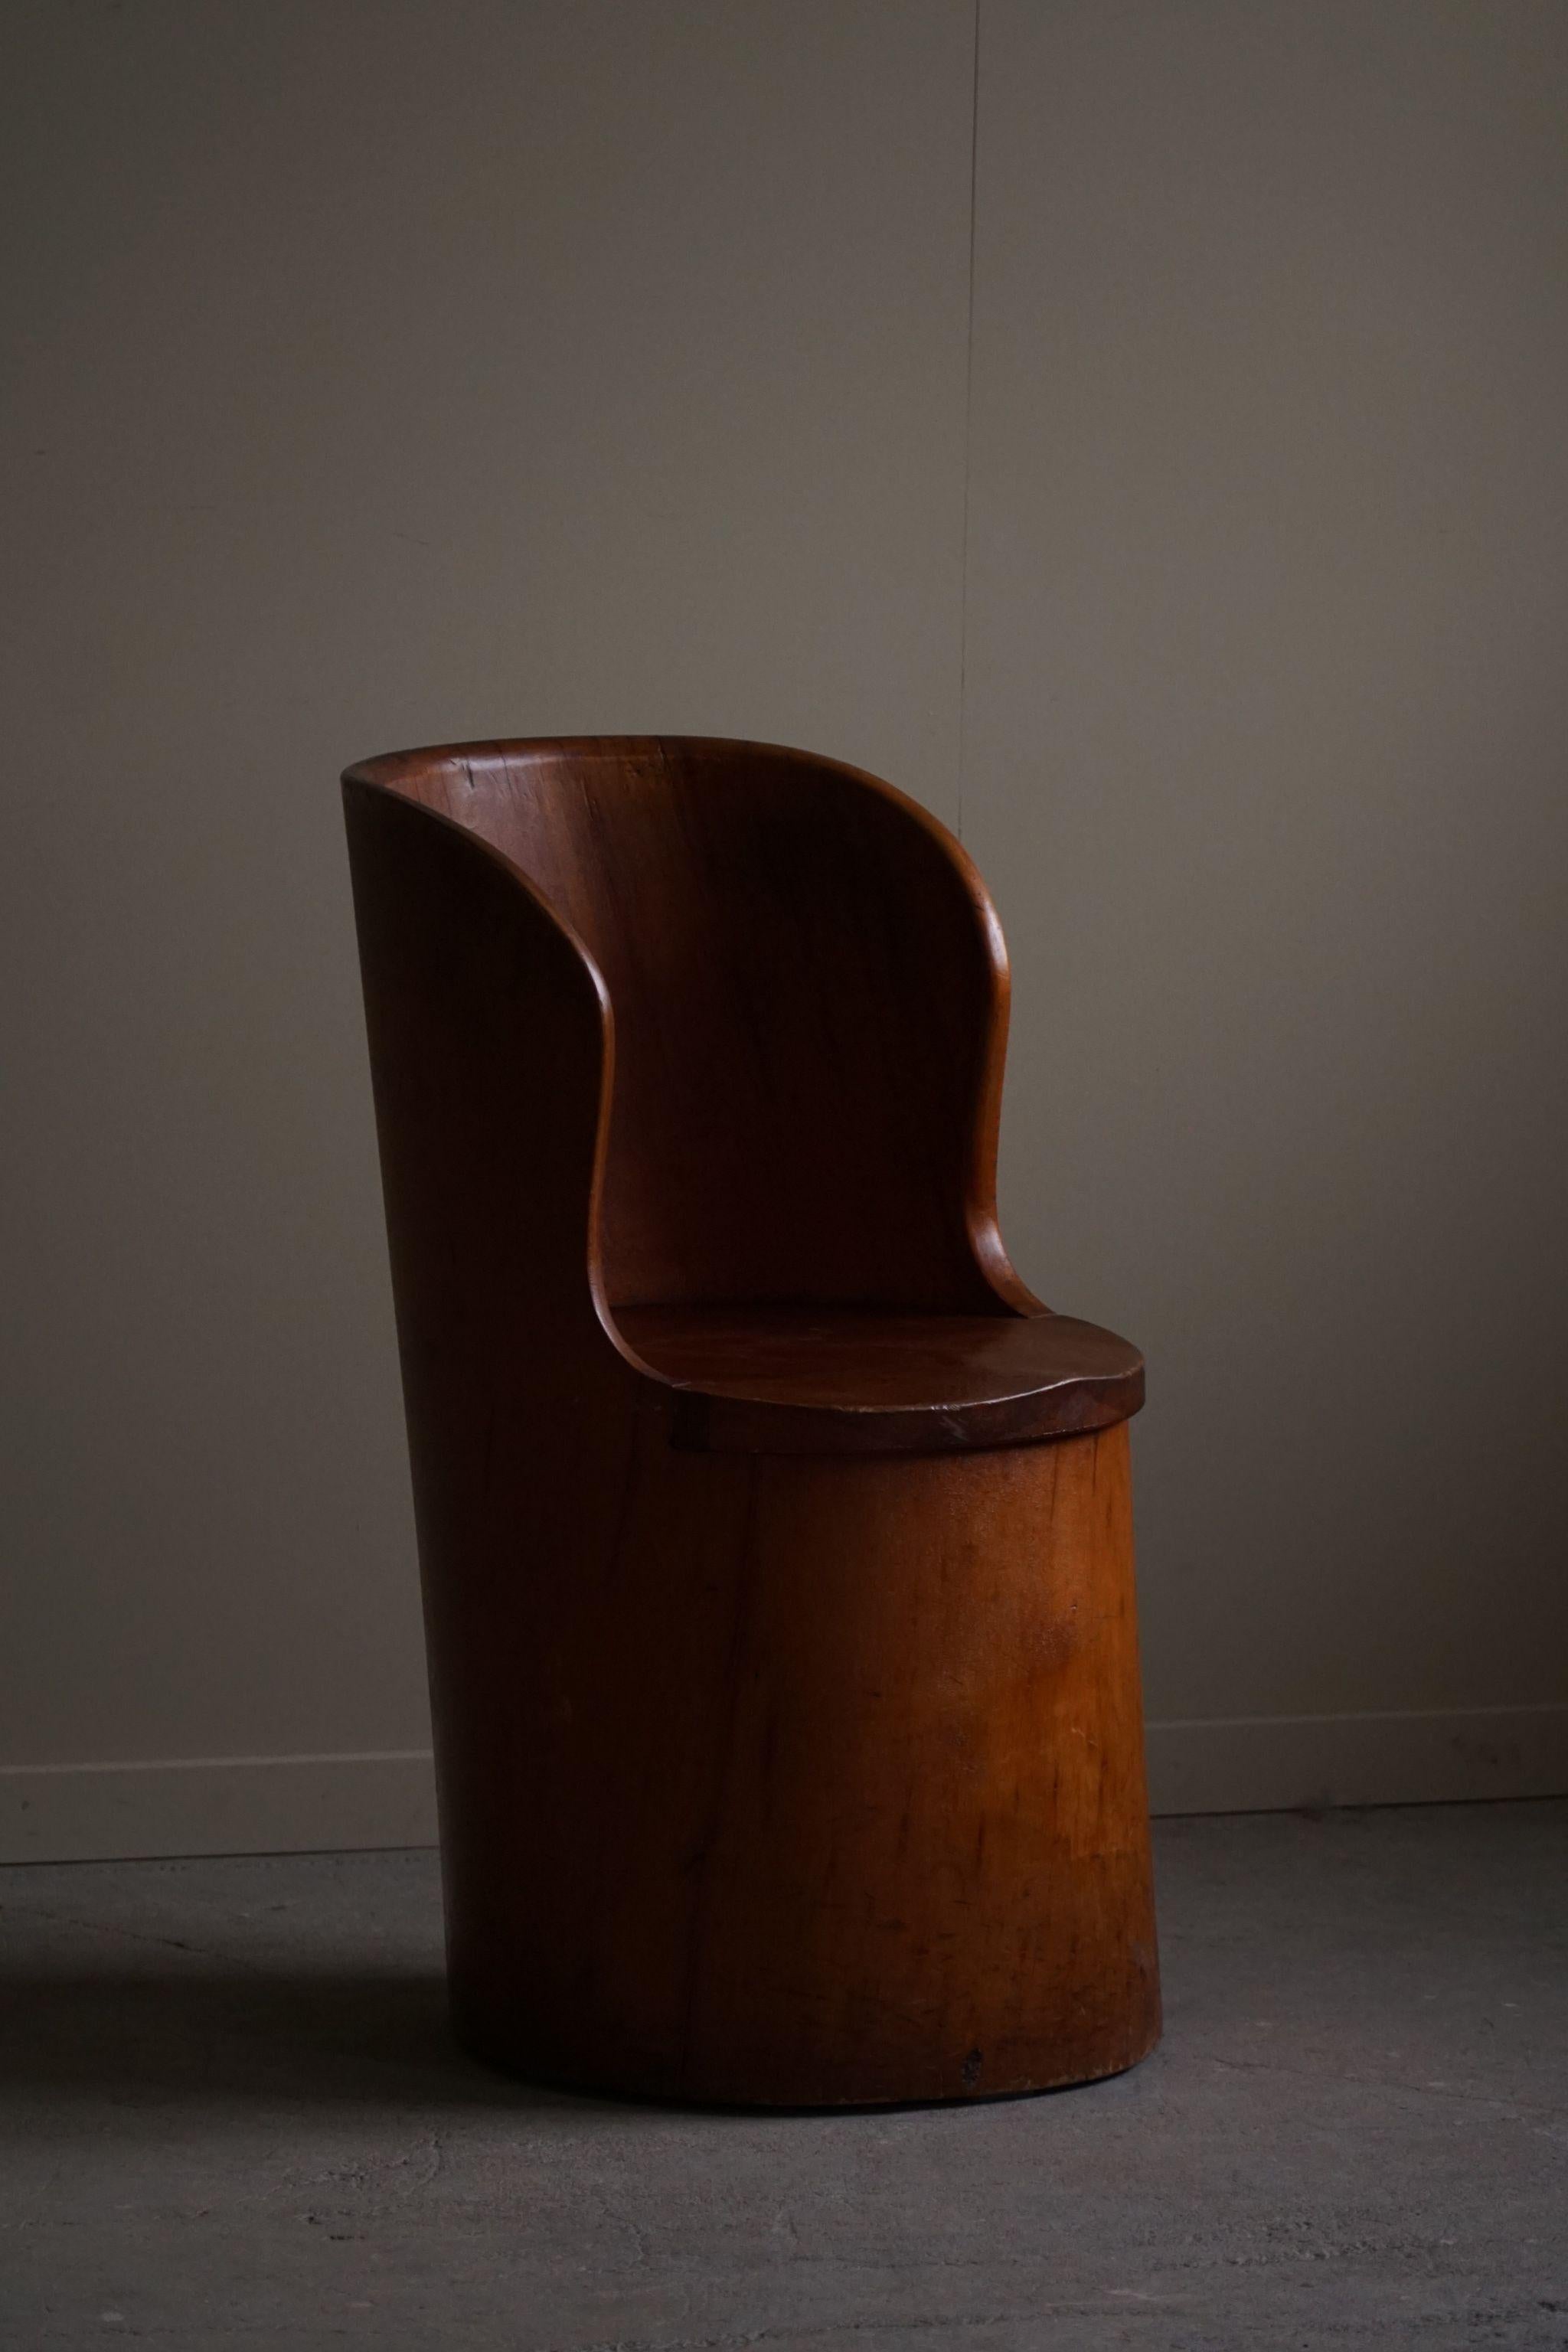  Hand Carved Primitive Stump Chair in Pine, Swedish Modern, Wabi Sabi, 1960s For Sale 3